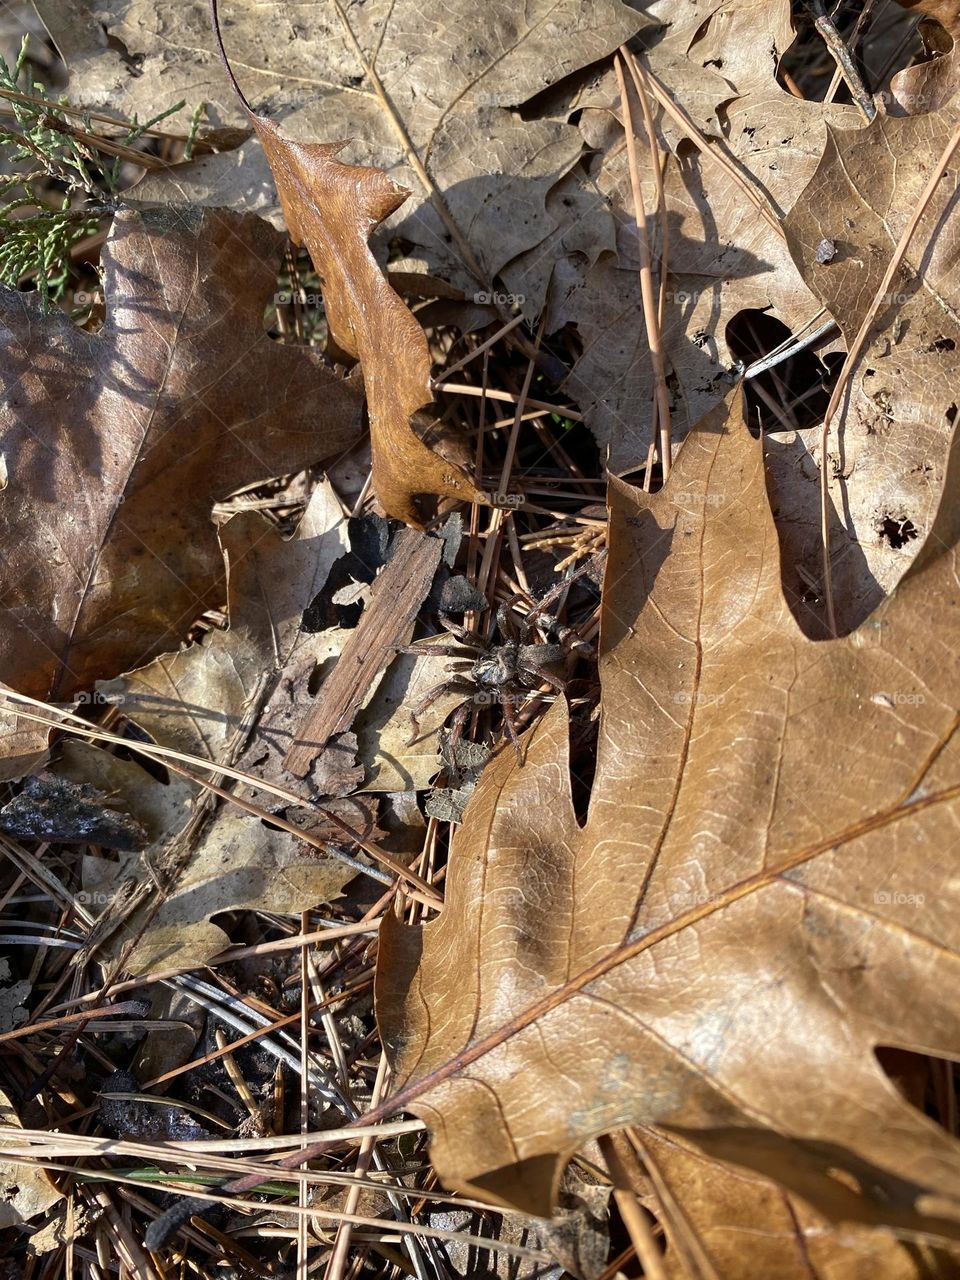 Spider on oak leaves